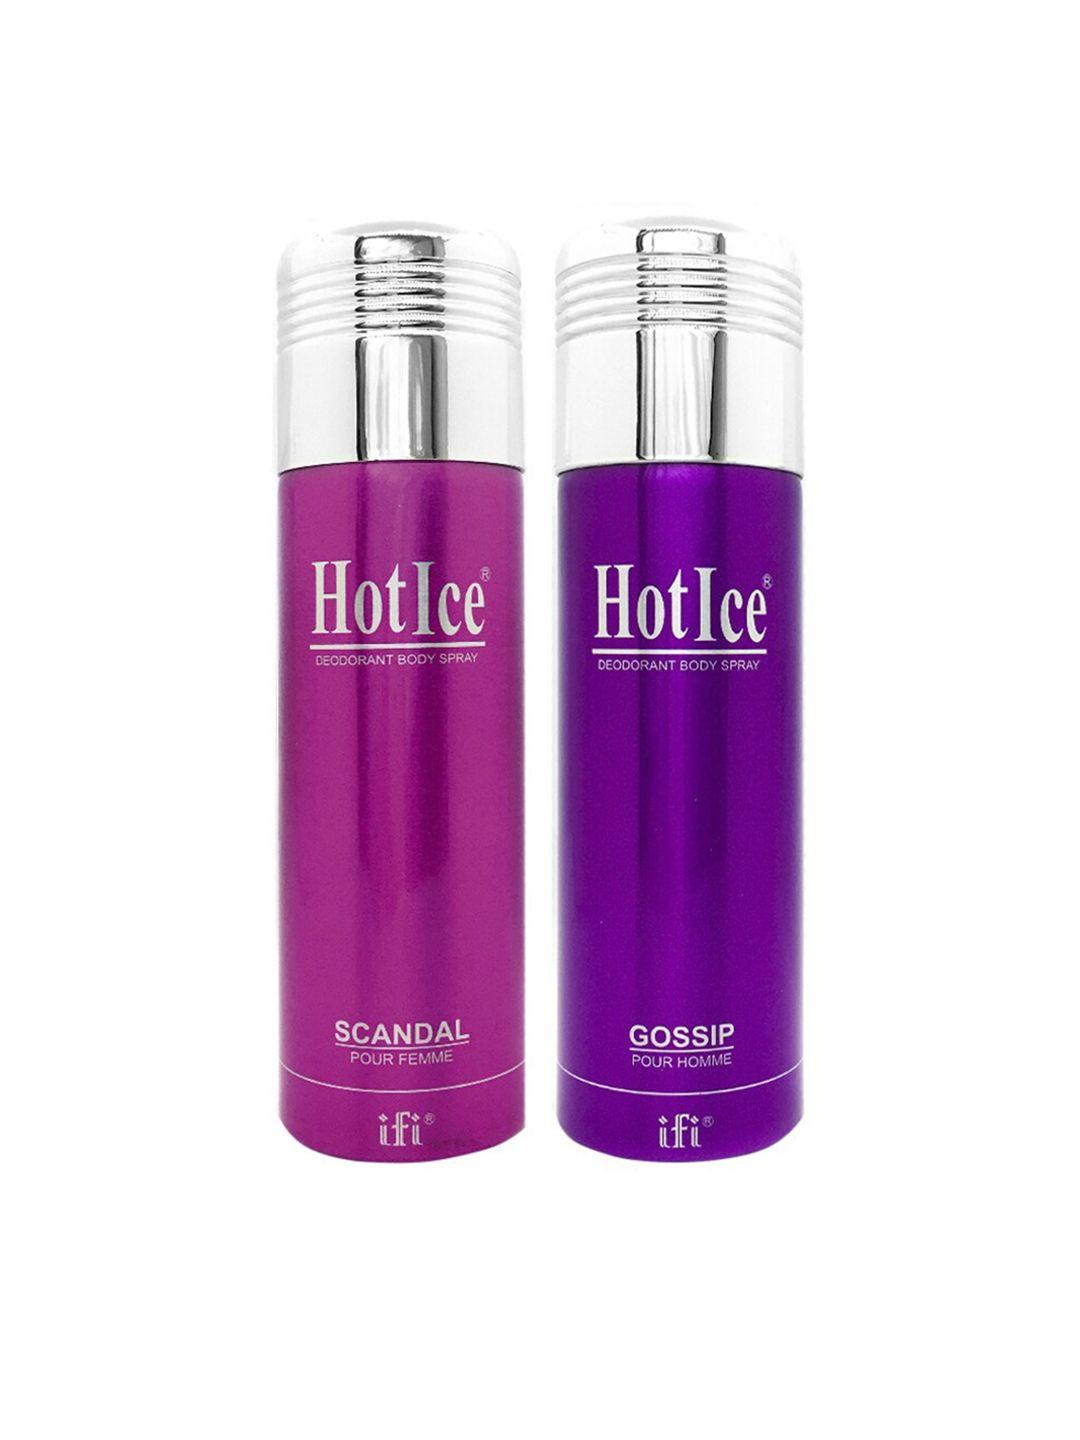 hot ice women set of 2 scandal fomme & gossip homme deodorant - 200 ml each